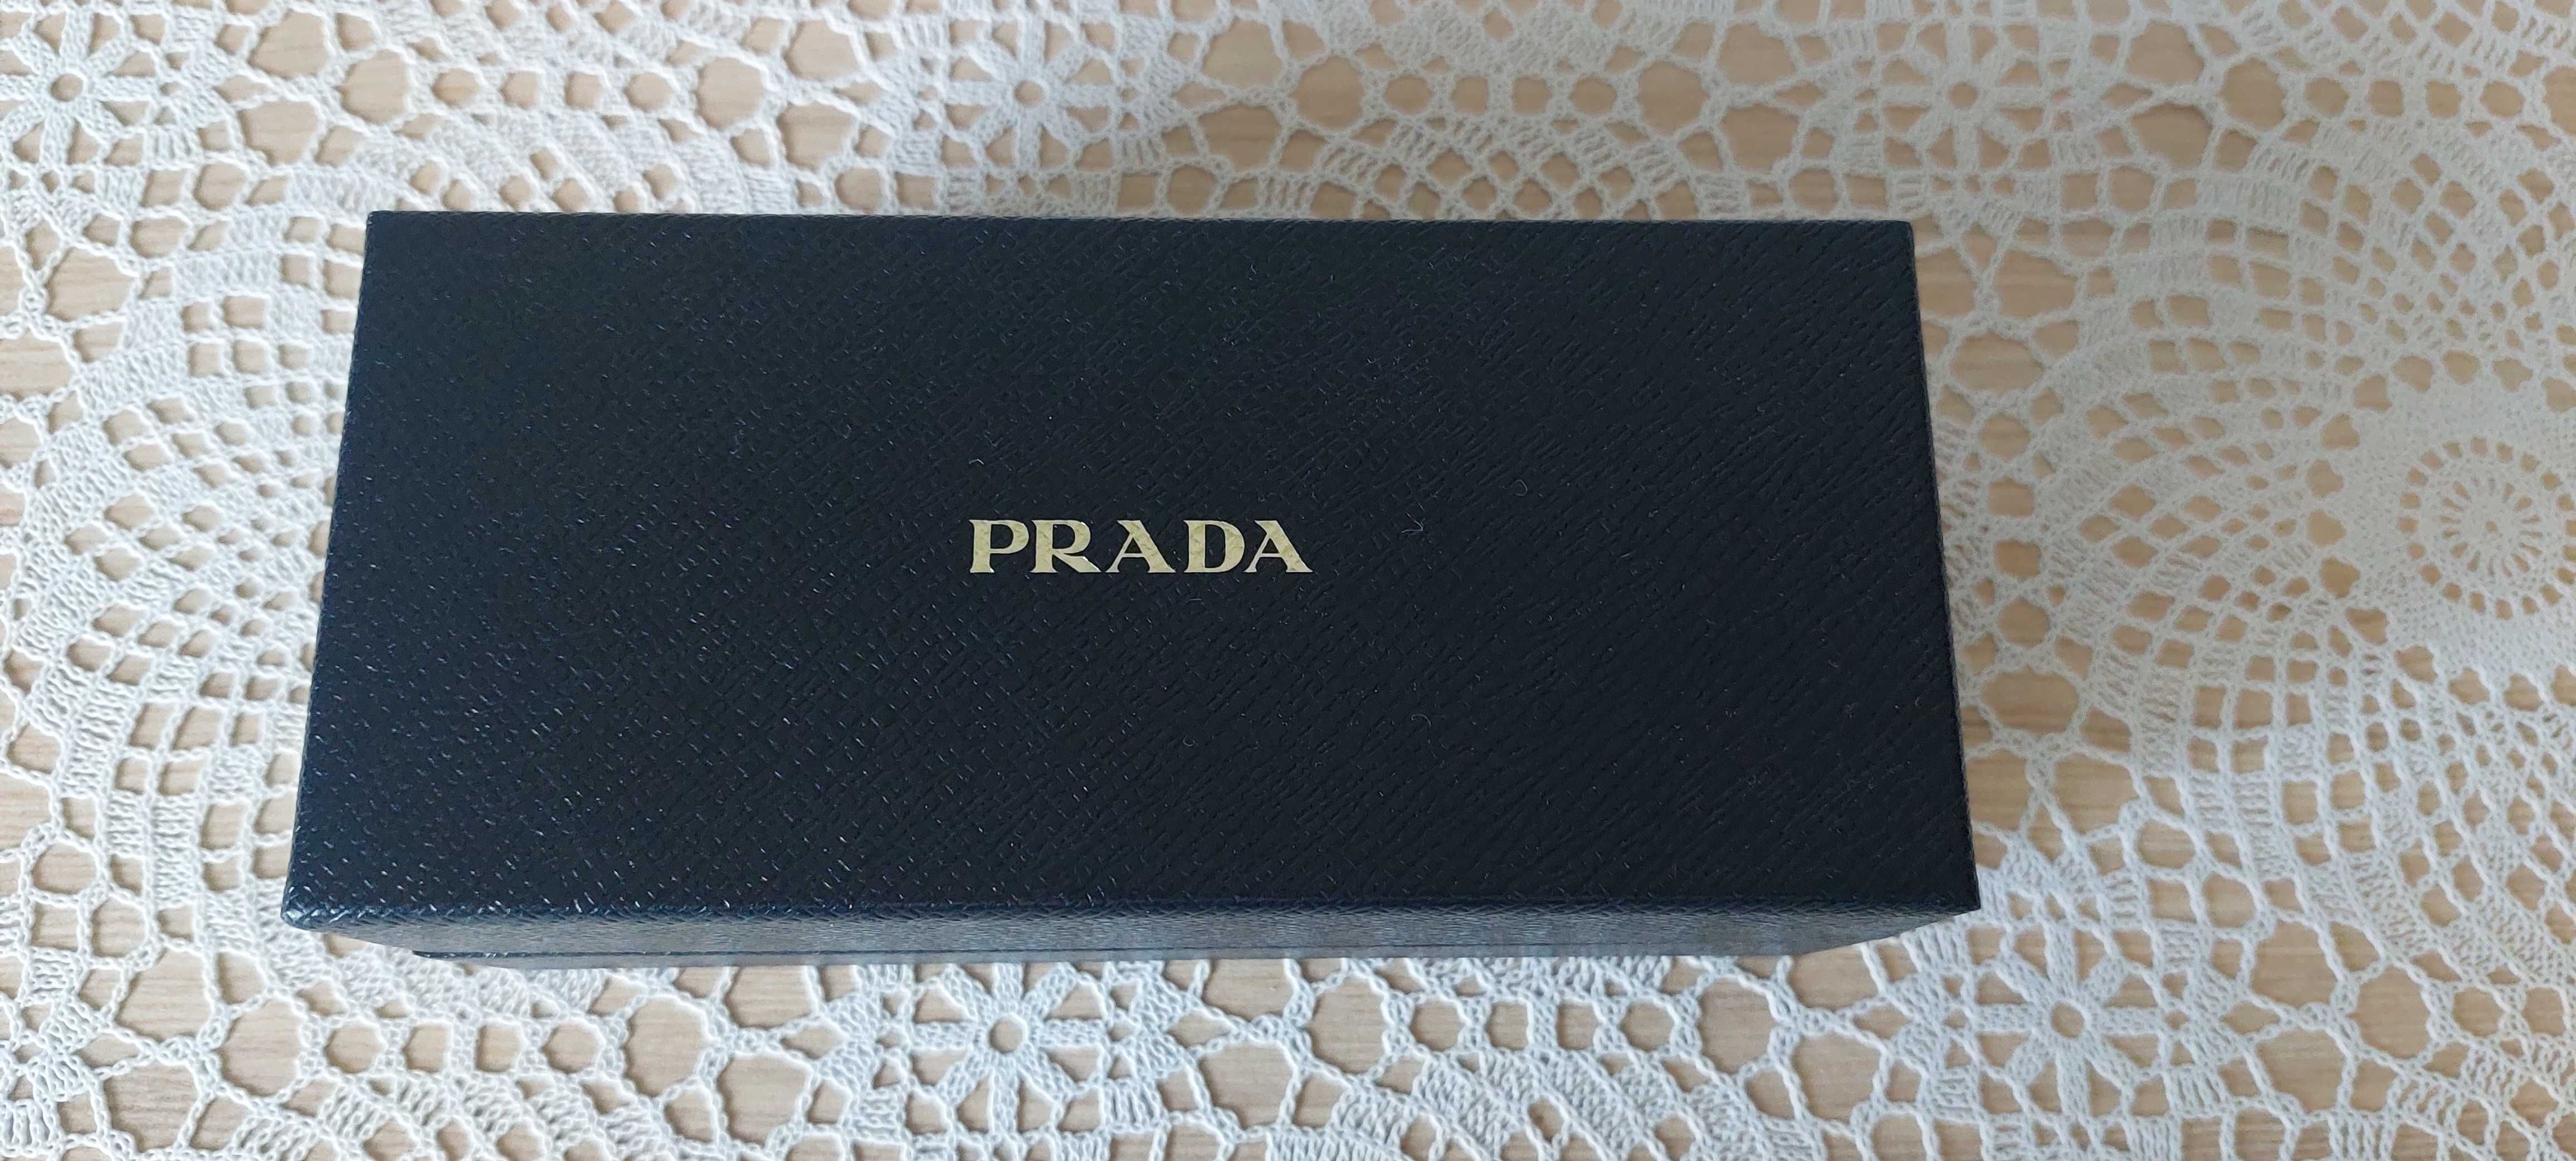 Pudełko PRADA - 16,5x7,5x6,5 cm - oryginalne, idealne na prezent